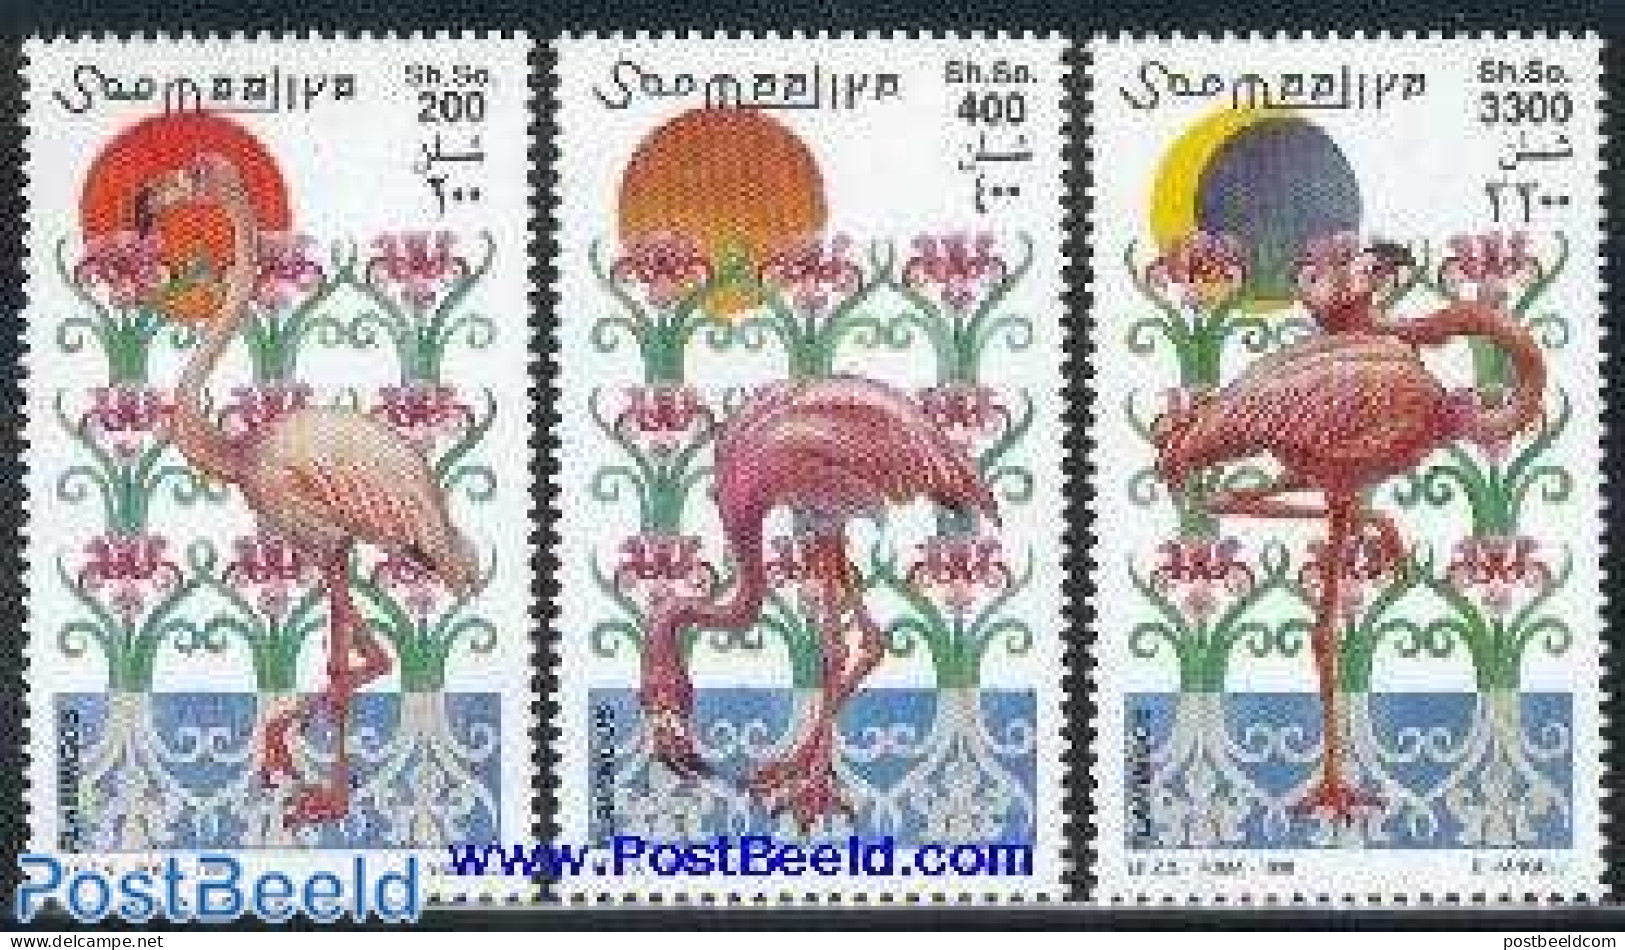 Somalia 1998 Flamingoes 3v, Mint NH, Nature - Birds - Flamingo - Somalia (1960-...)